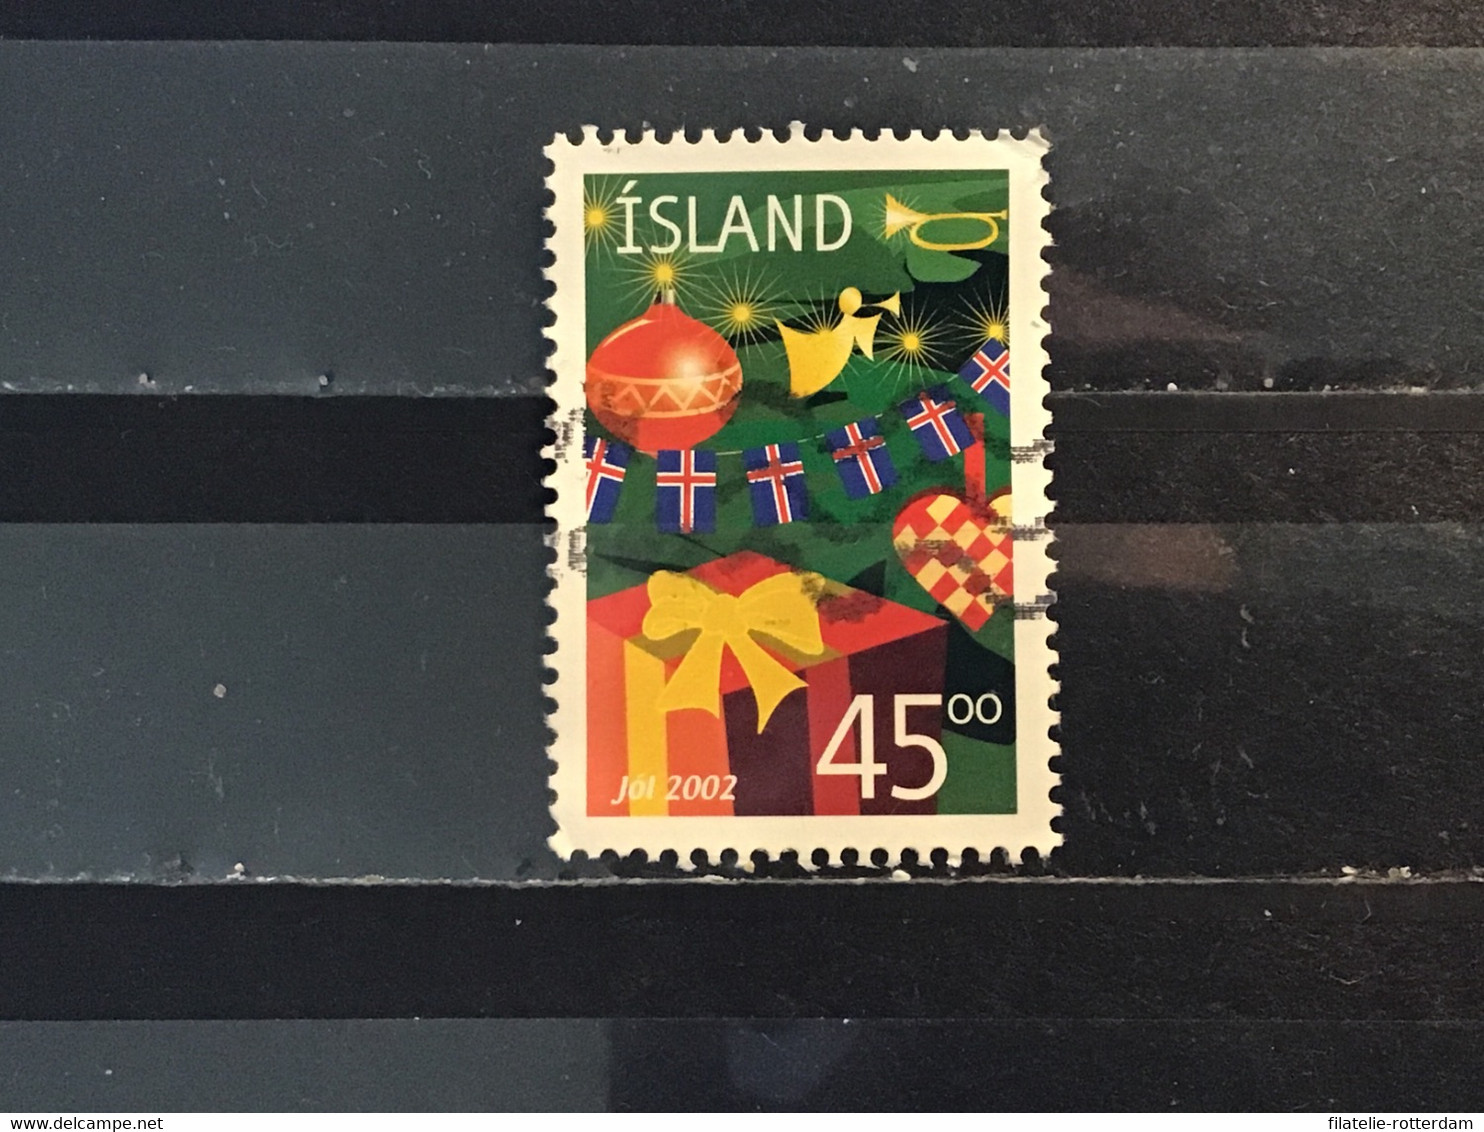 IJsland / Iceland - Kerstmis (45) 2002 - Usati